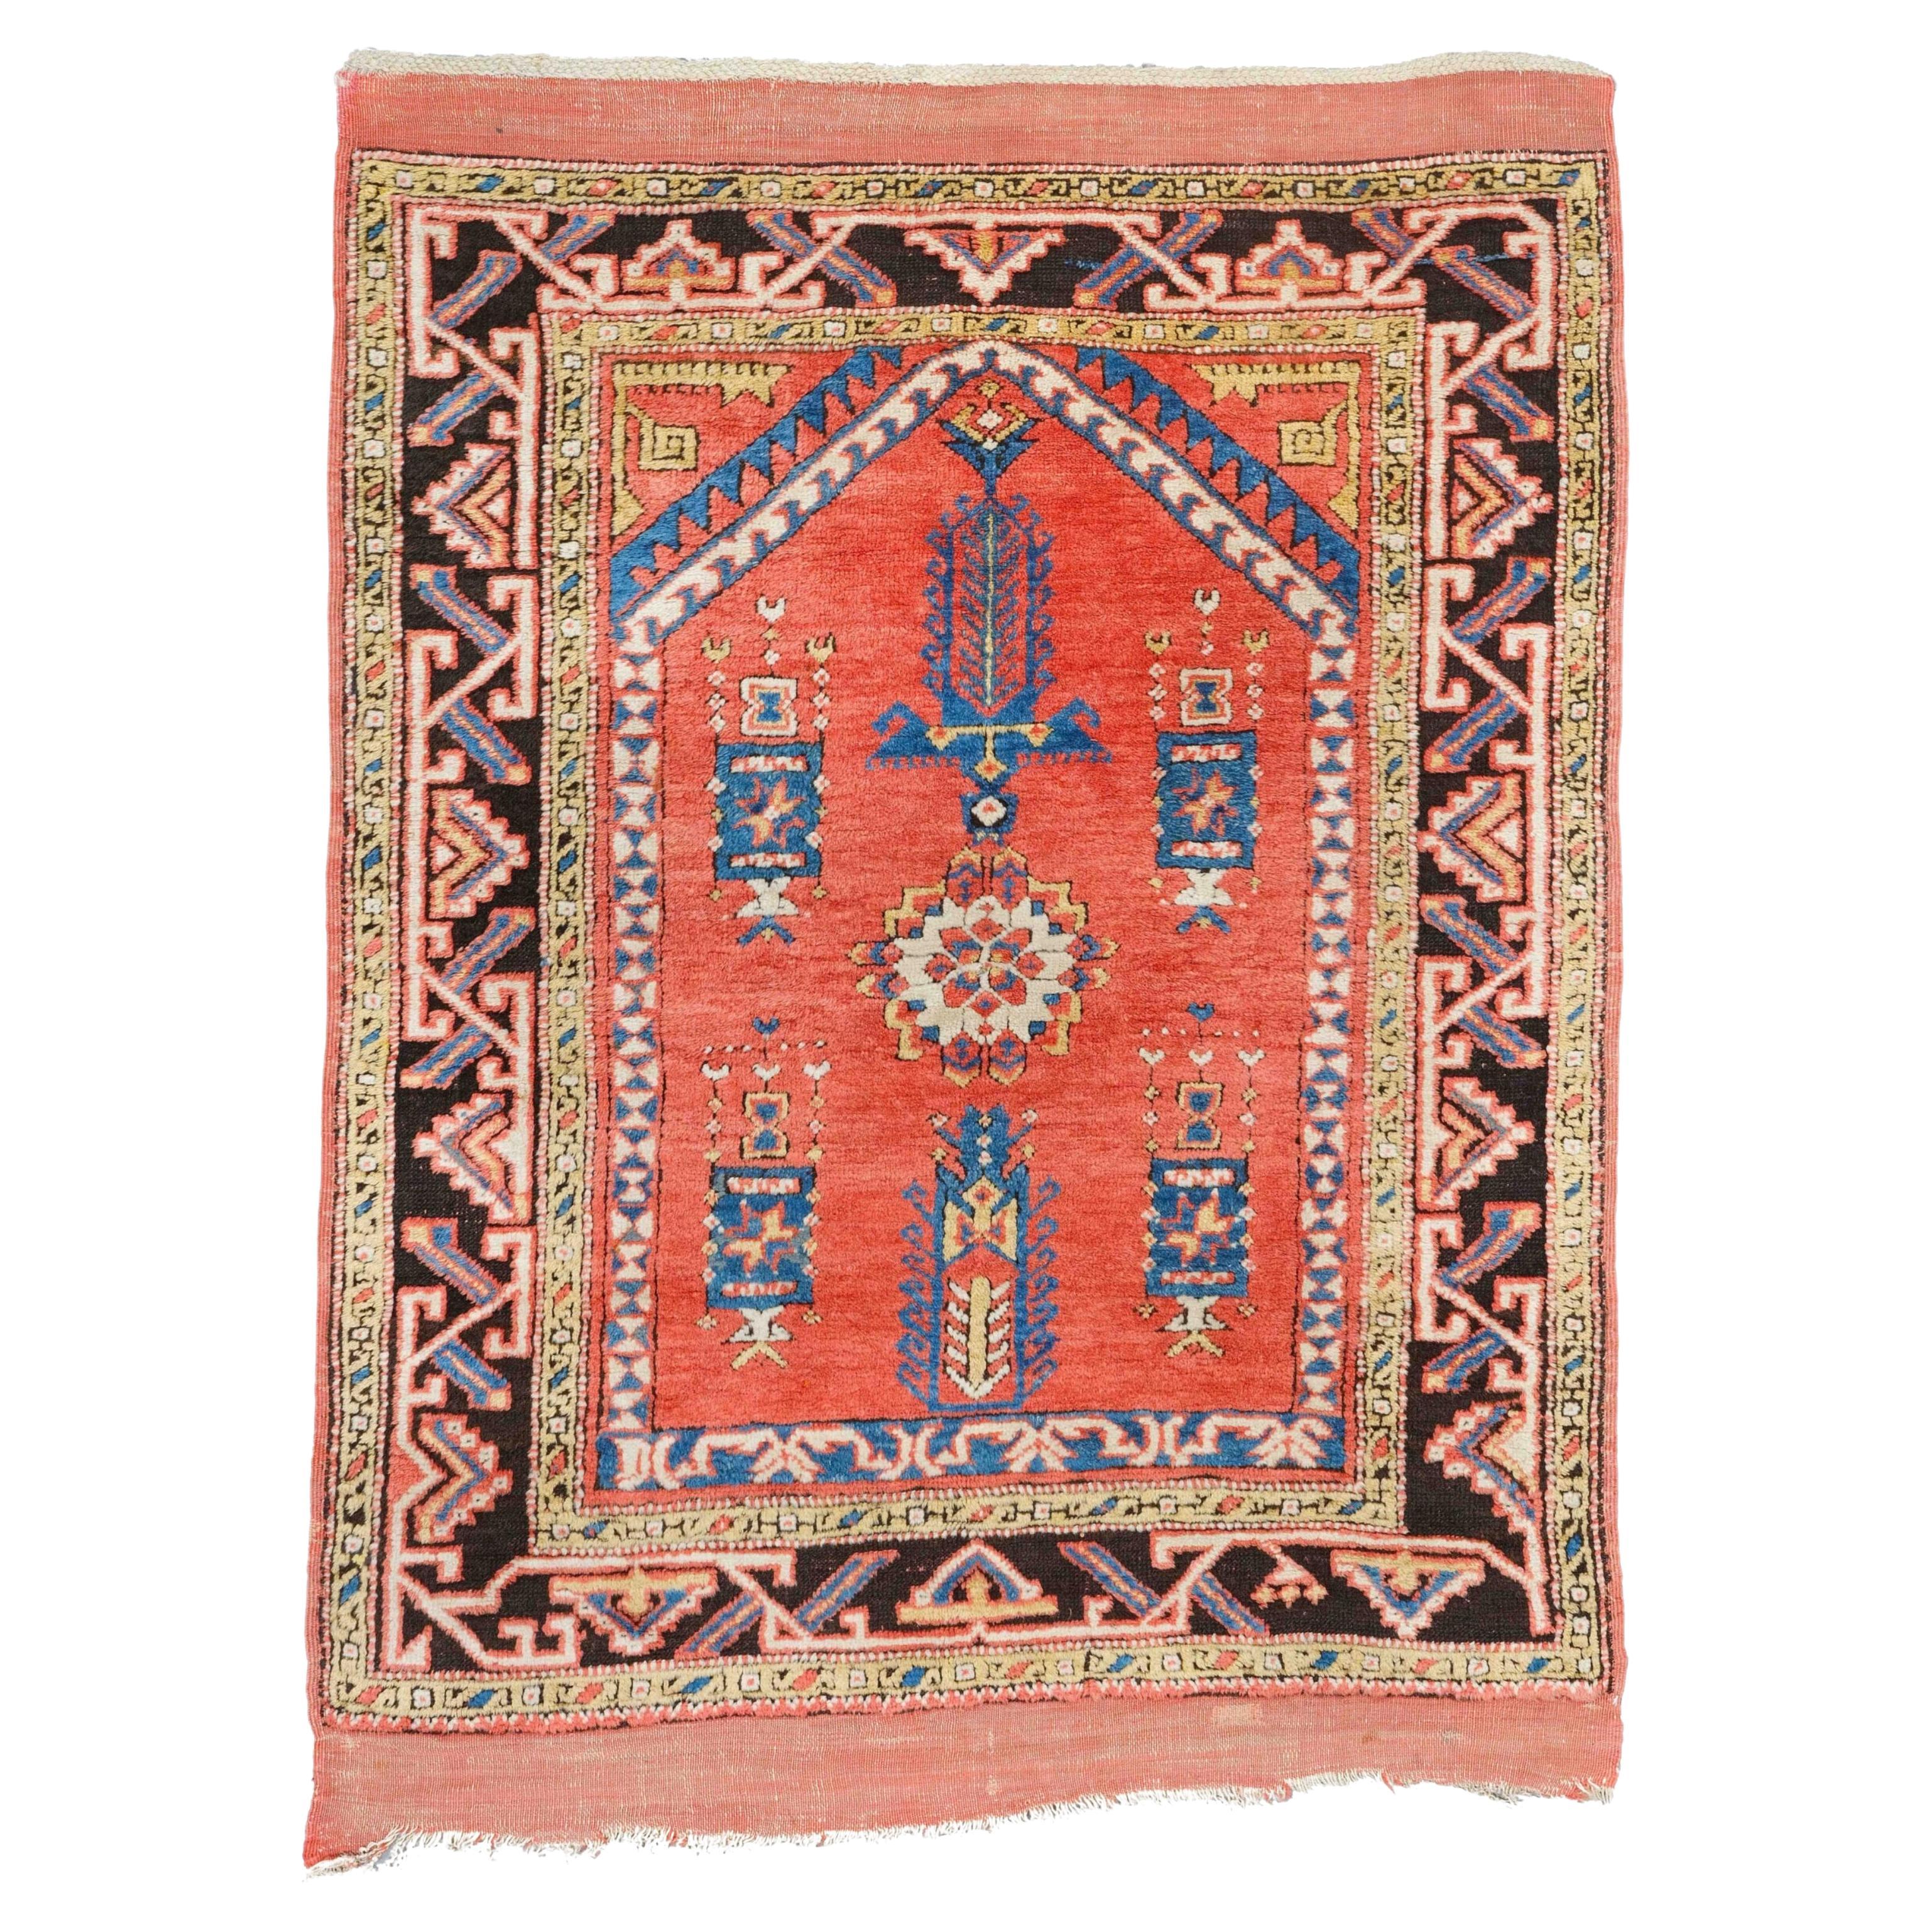 Antique Bergama Rug - Early 19th Century Anatolian Prayer Bergama Rug For Sale